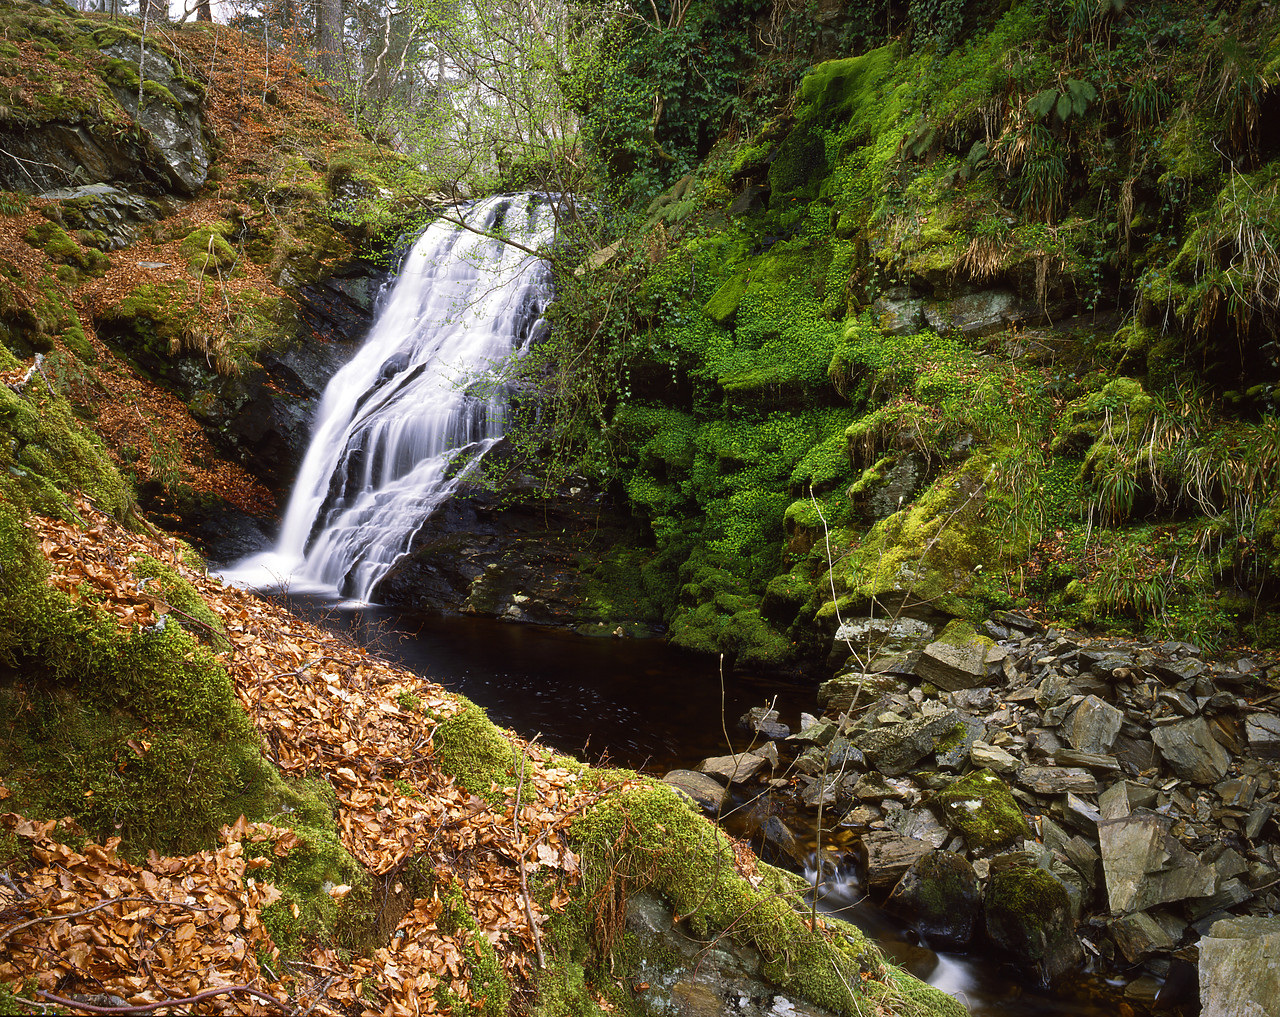 #923968-4 - Waterfall at Garth Castle, Tayside Region, Scotland